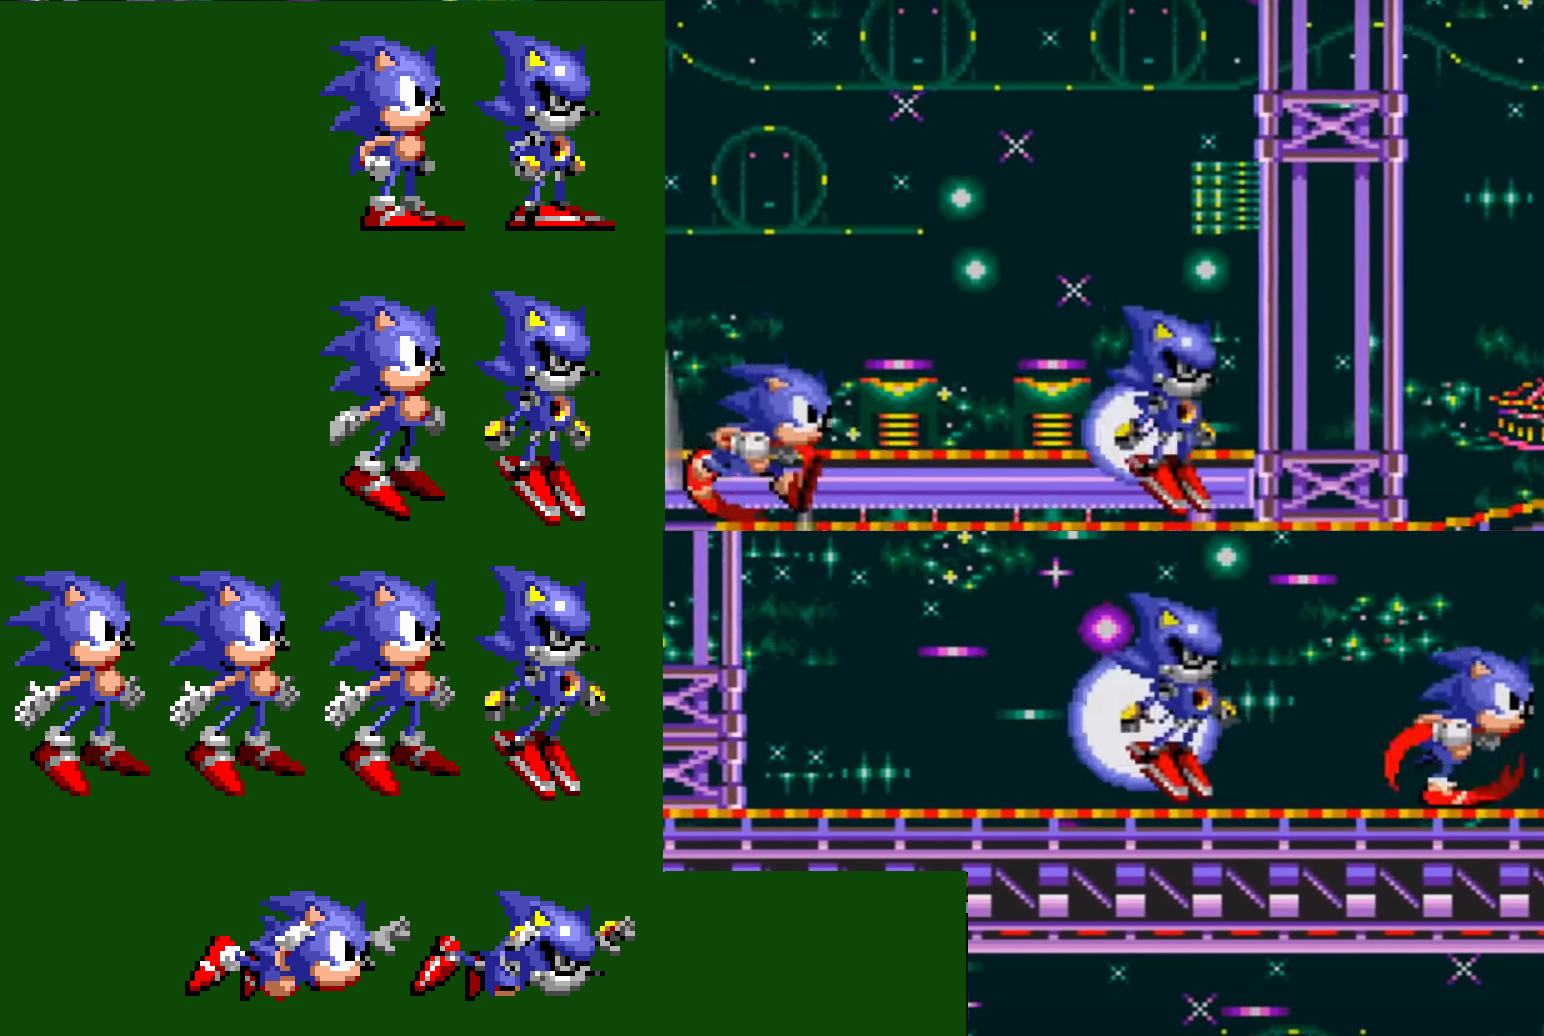 CD: Sonic's Unused Transformation Moving/Running Sprites